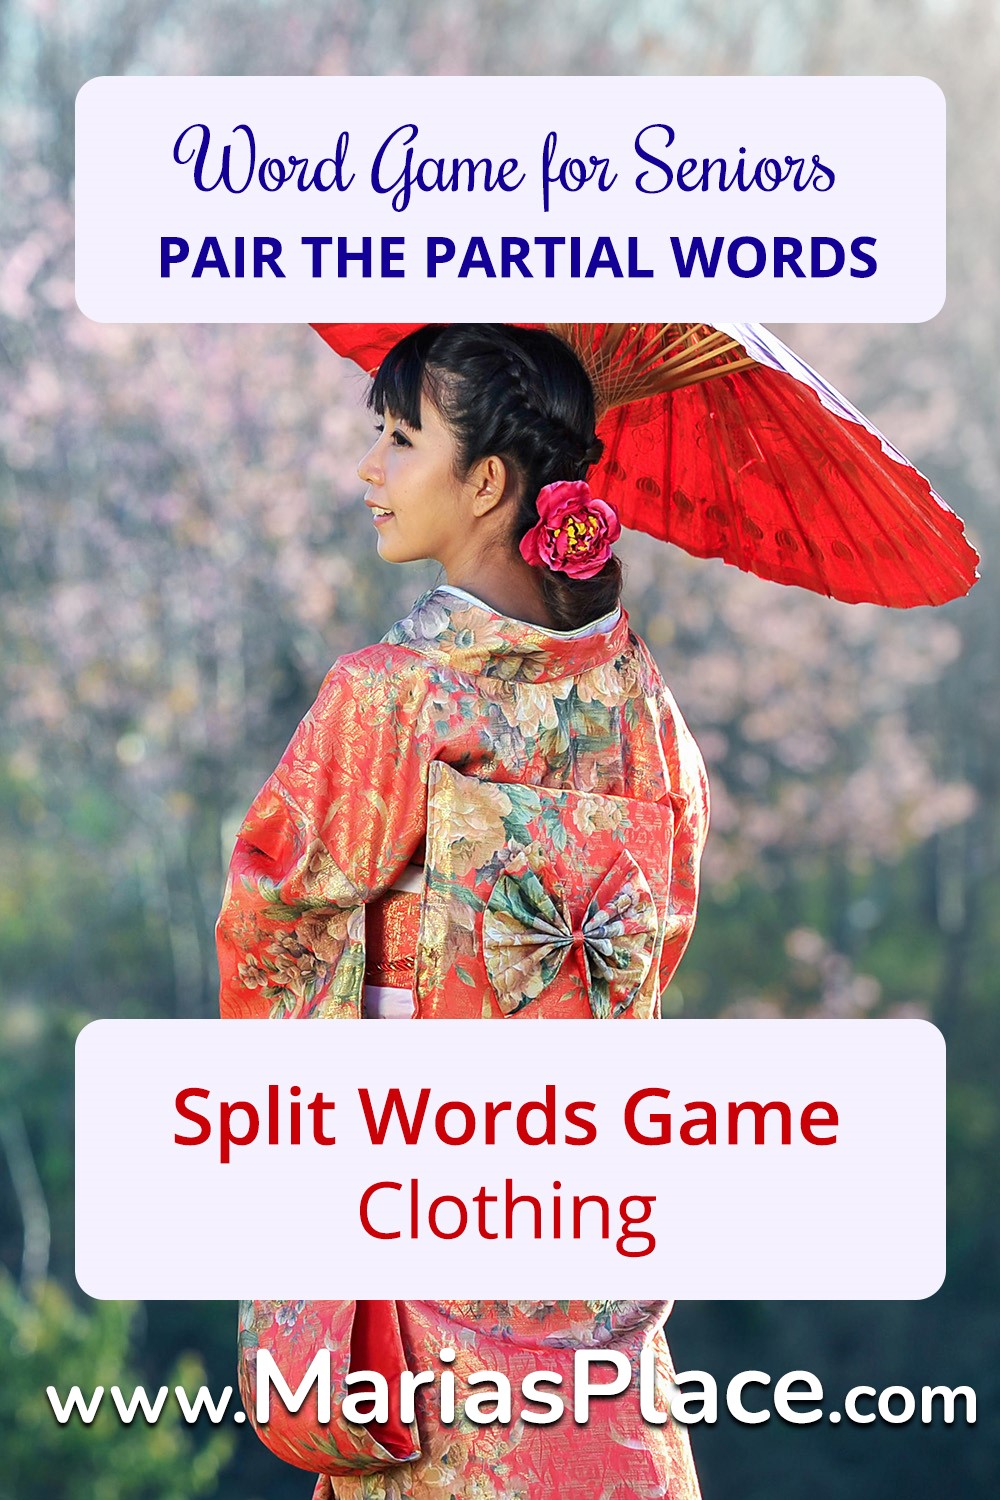 Split Words, Clothing